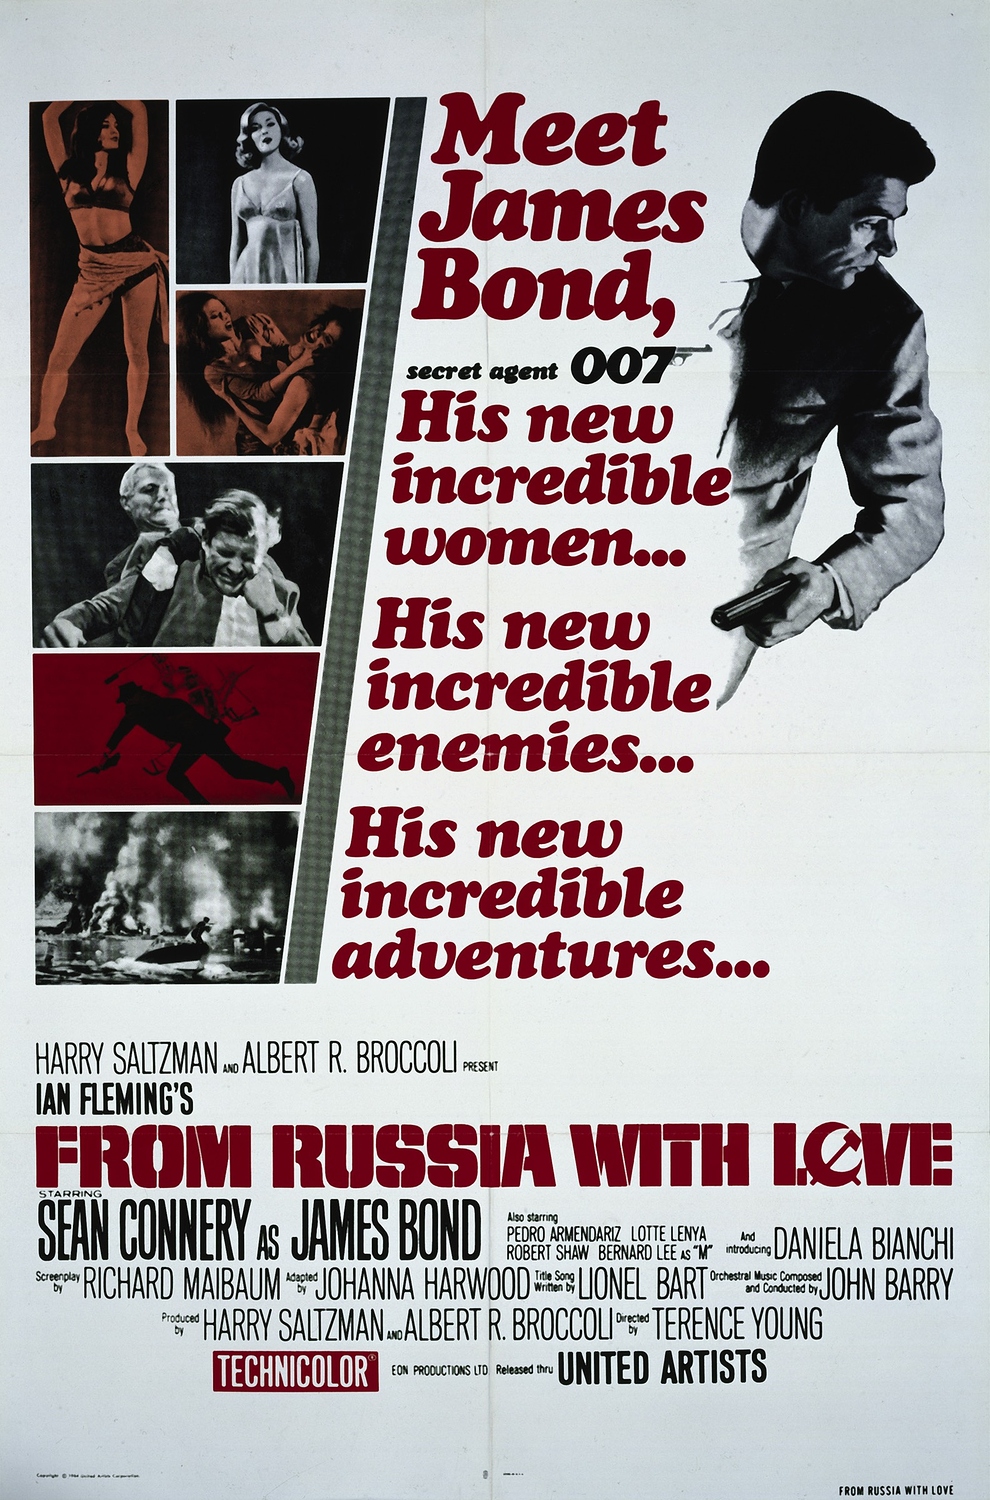 Six decades of James Bond 007 posters - Inspiration - Graphic Design Forum